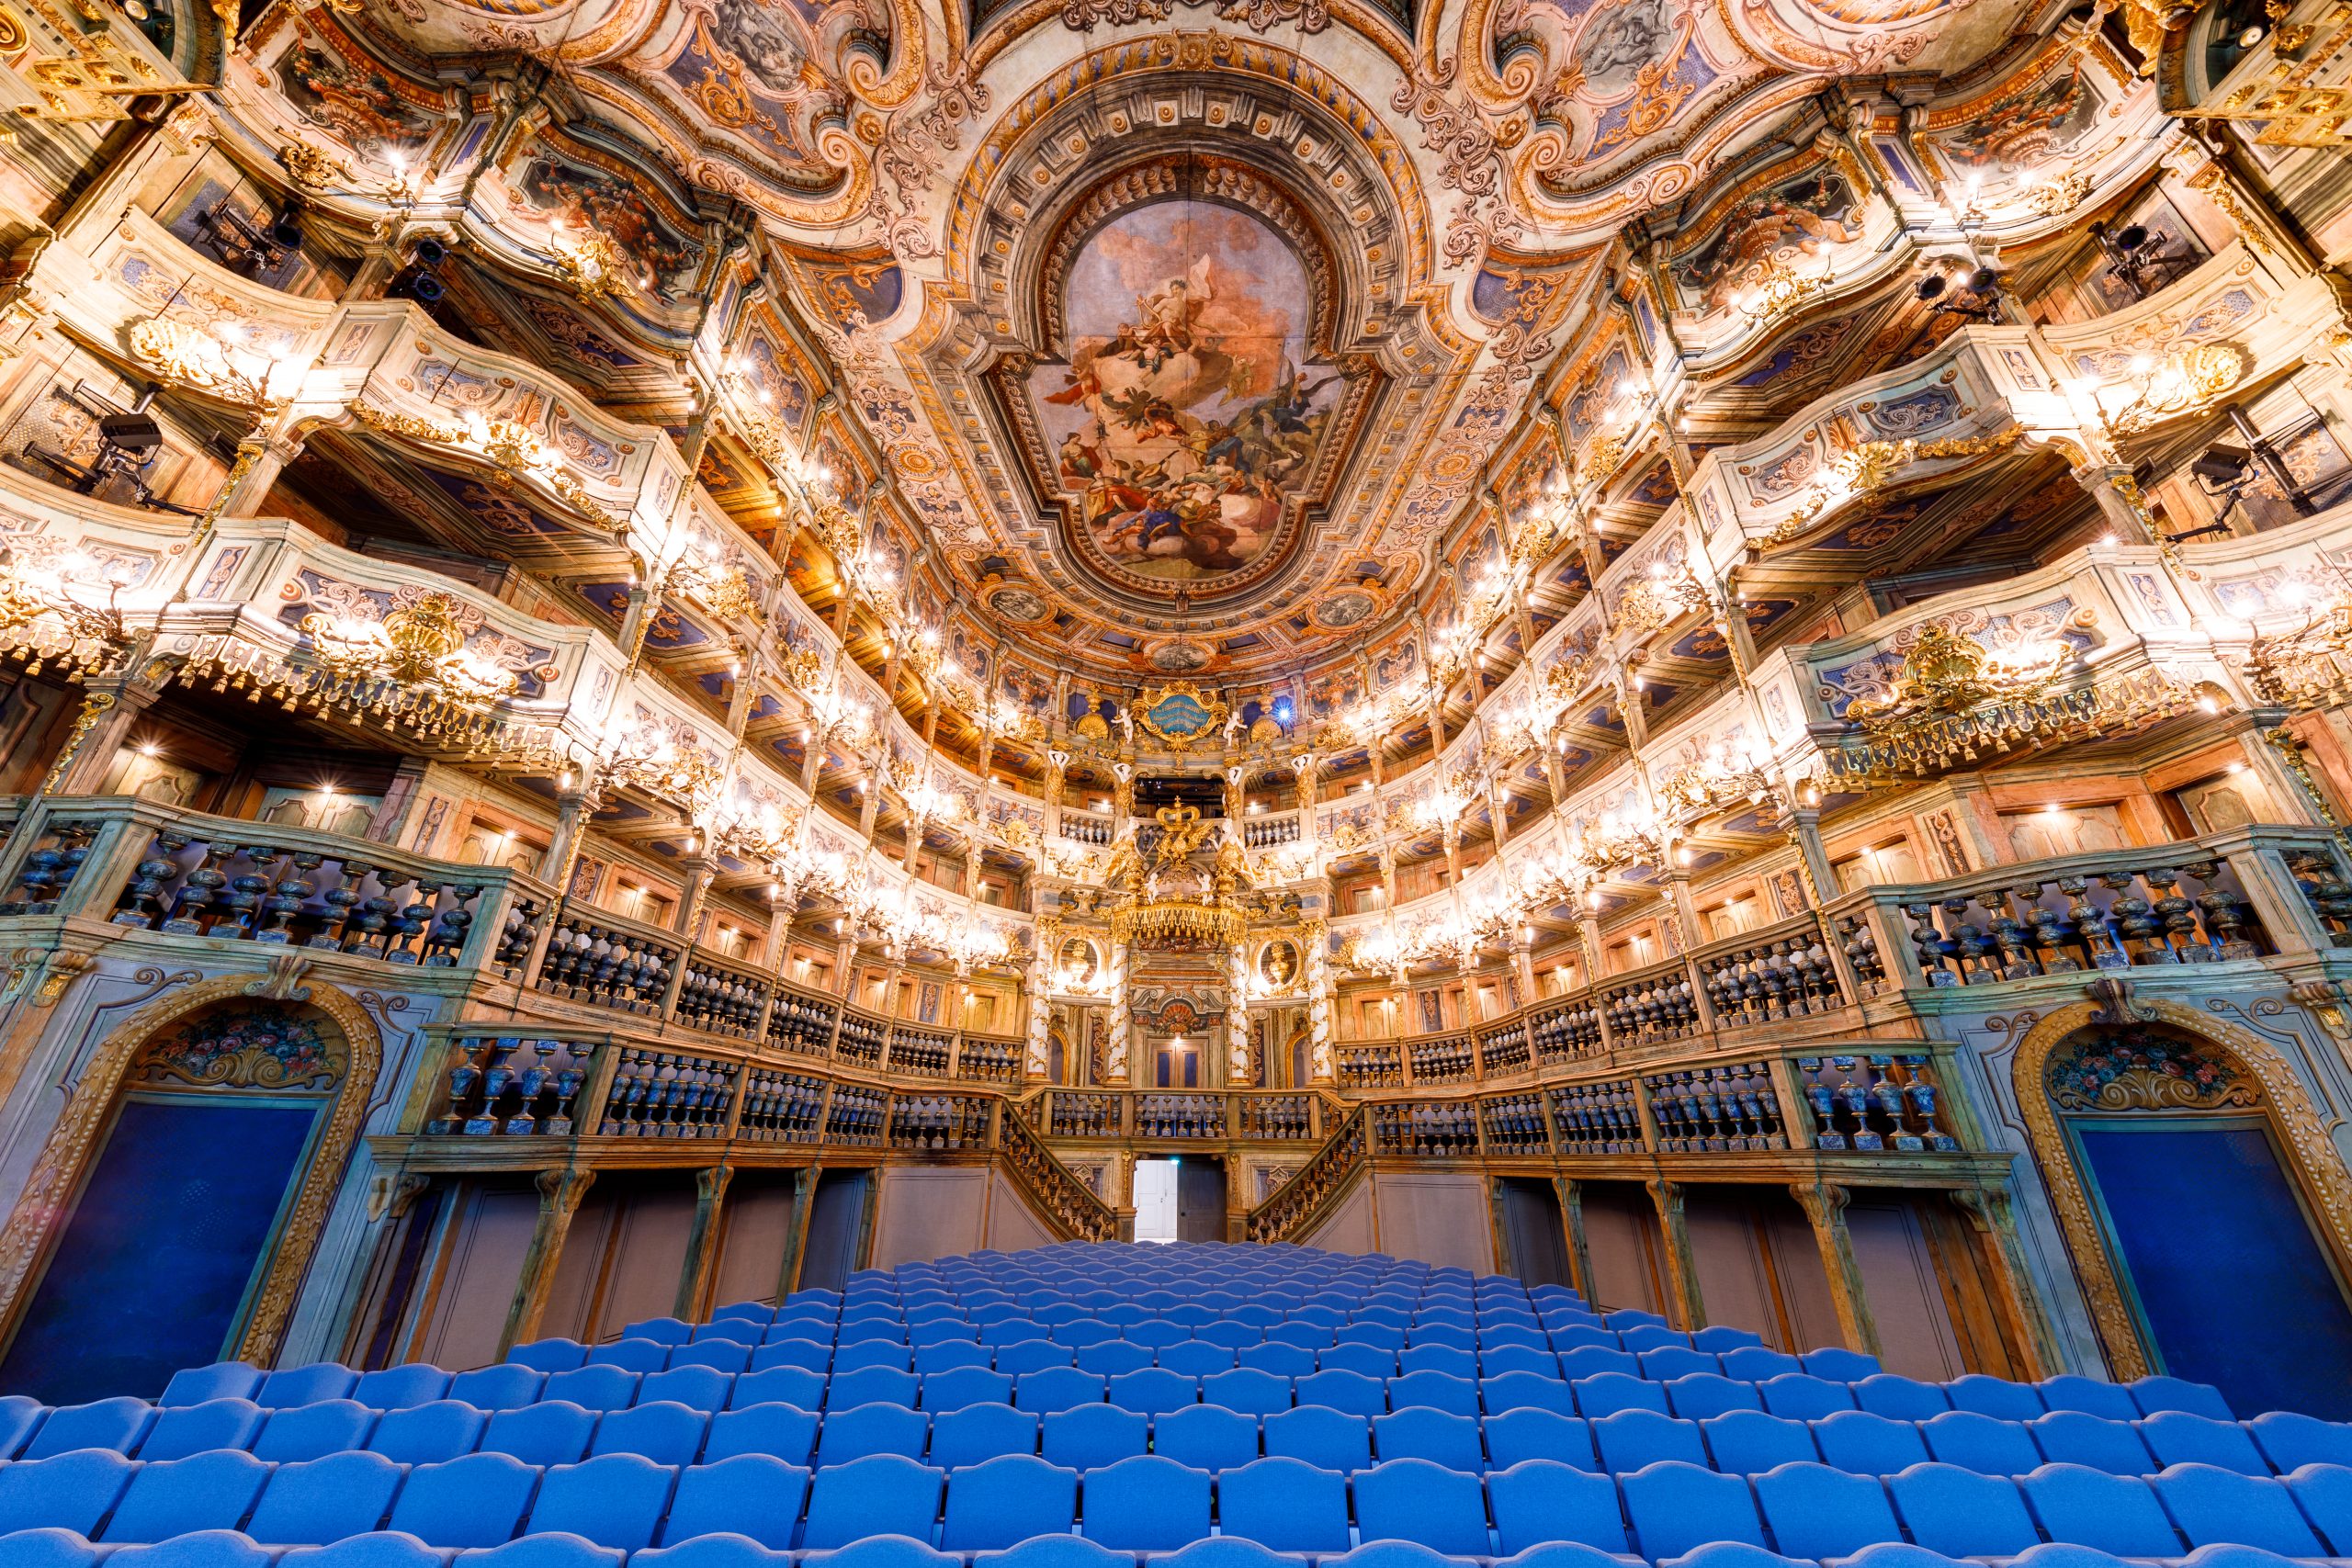 UNESCO Opera House Bayreuth - 02 (c)Loic Lagarde